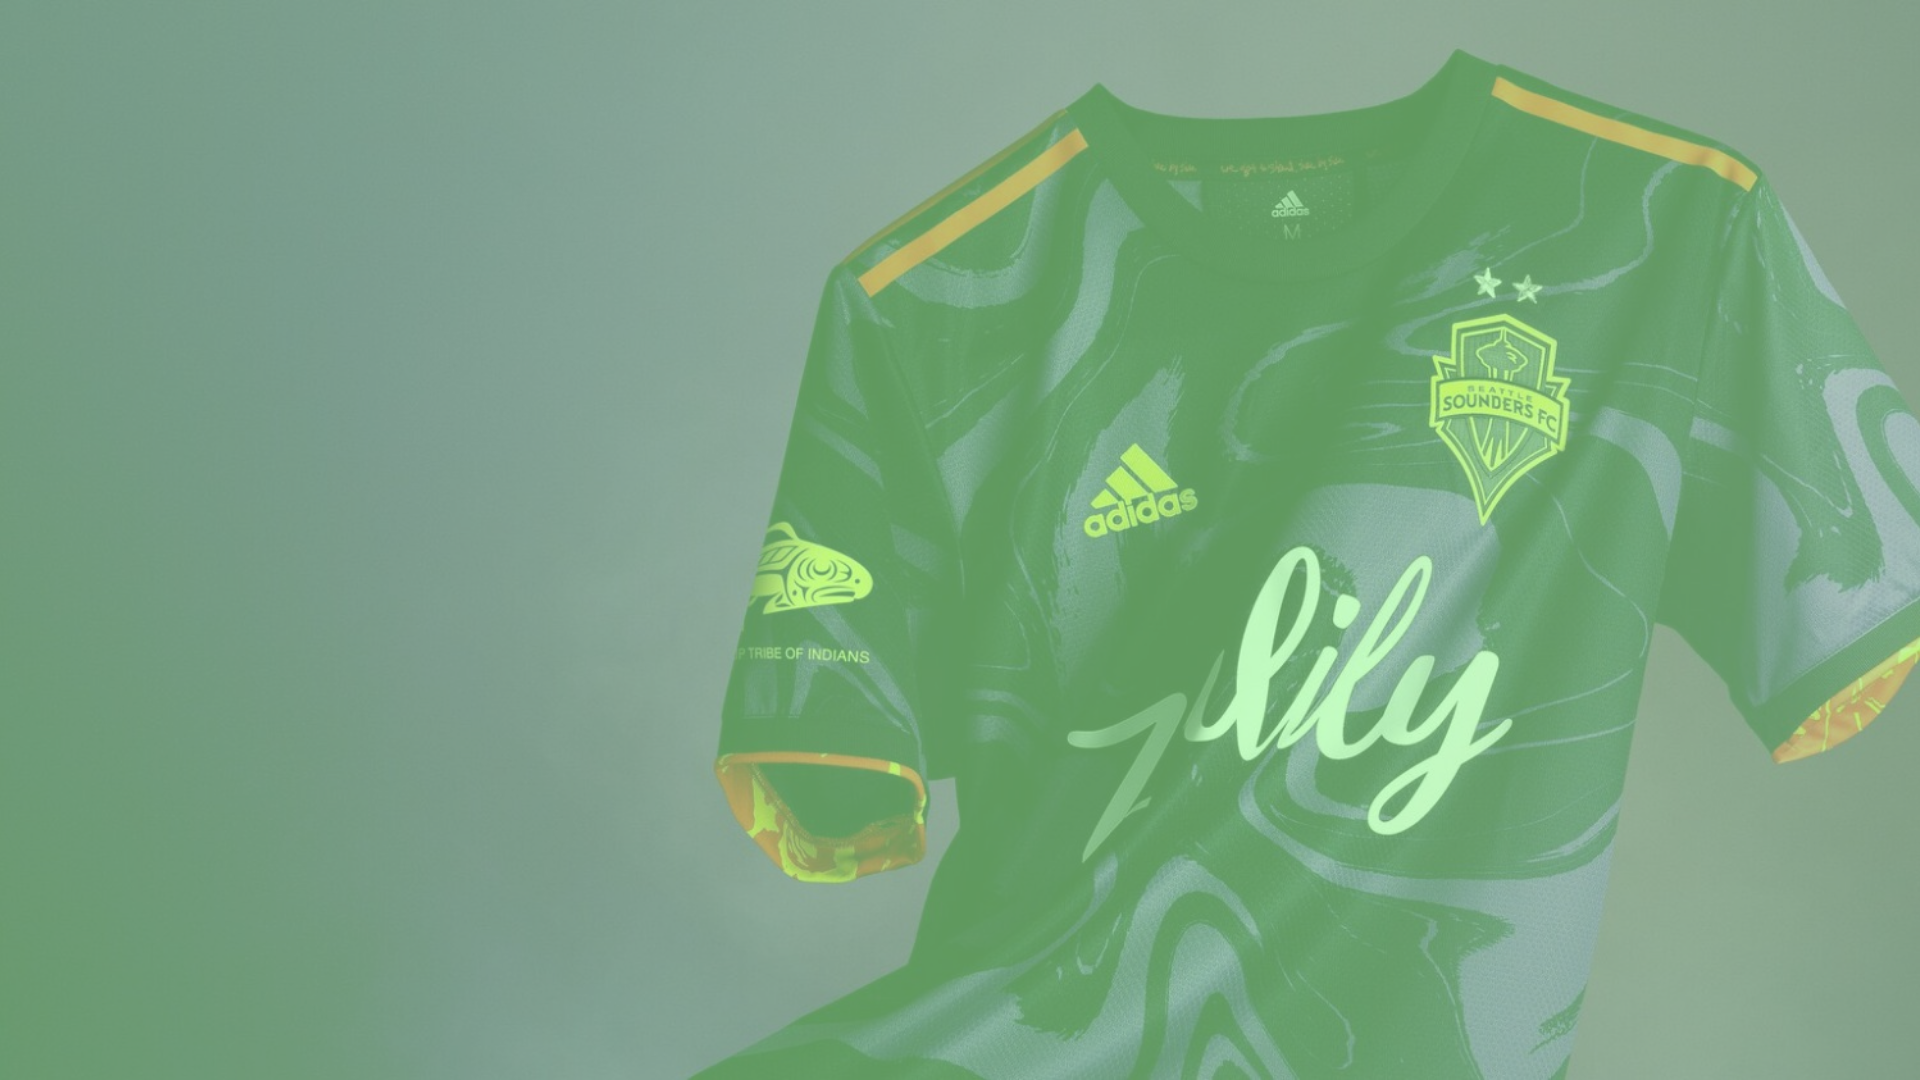 Don’t buy replica MLS jerseys